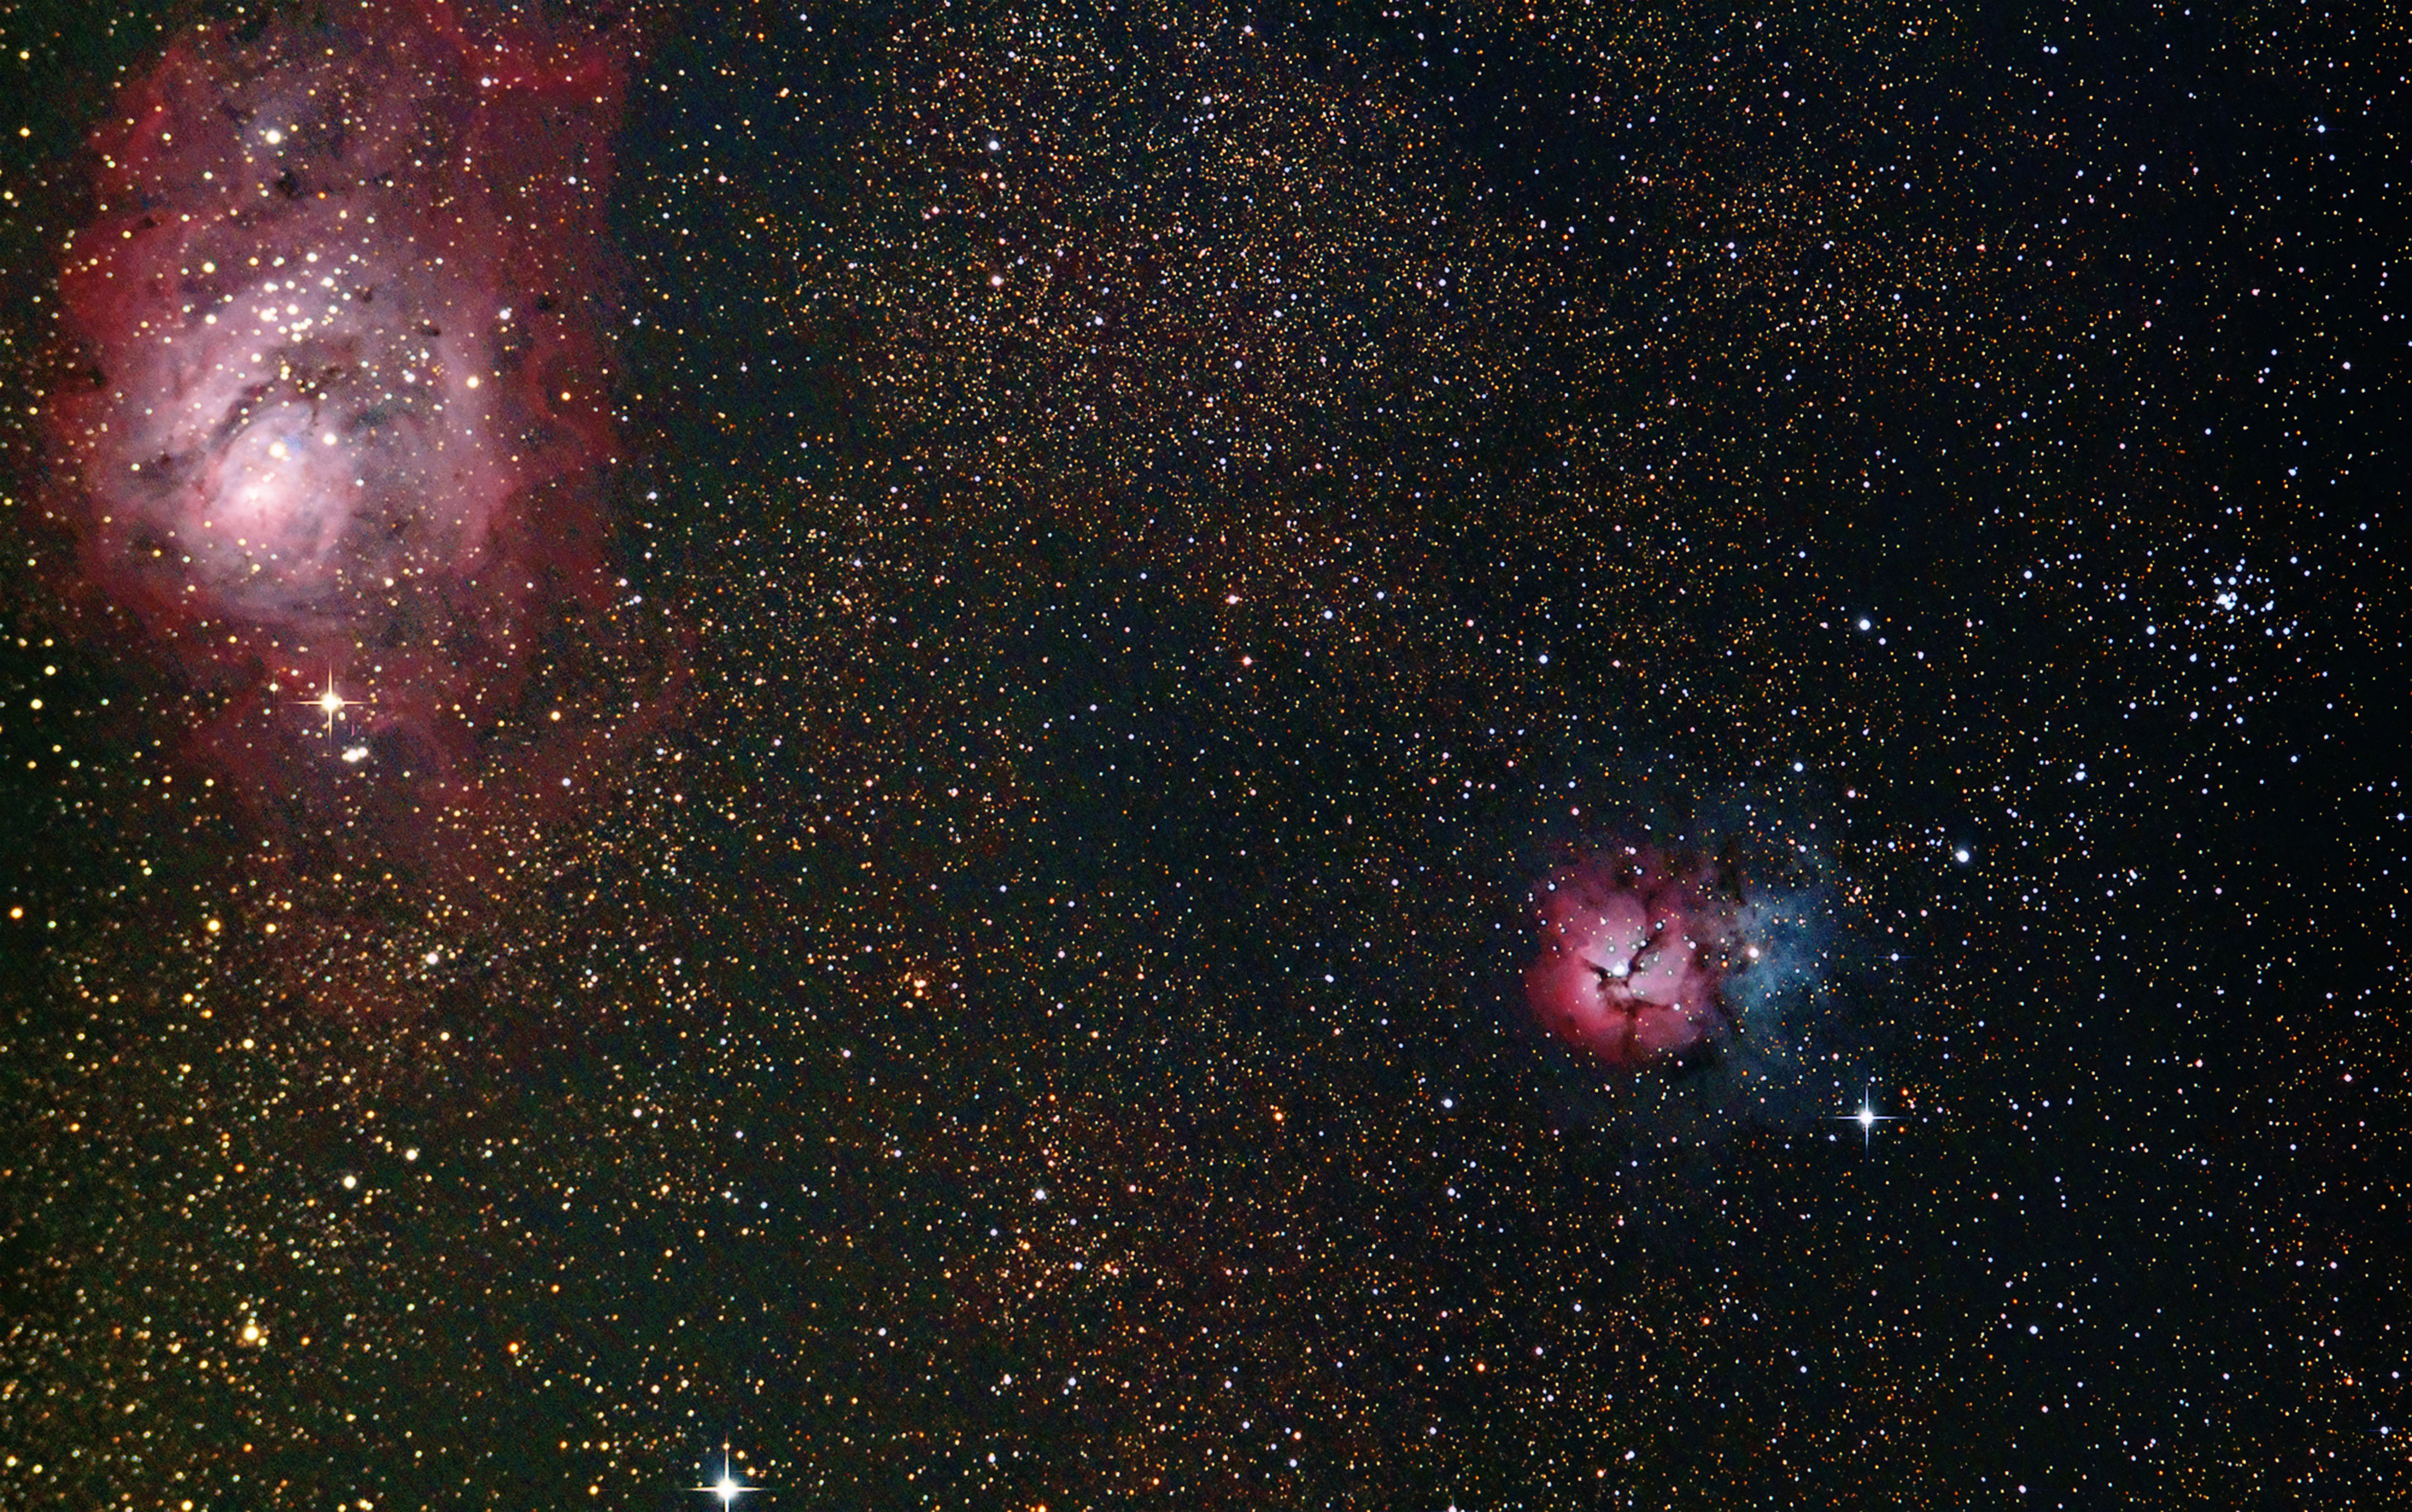 M8 and M20 - The Lagoon and Trifid Nebulae